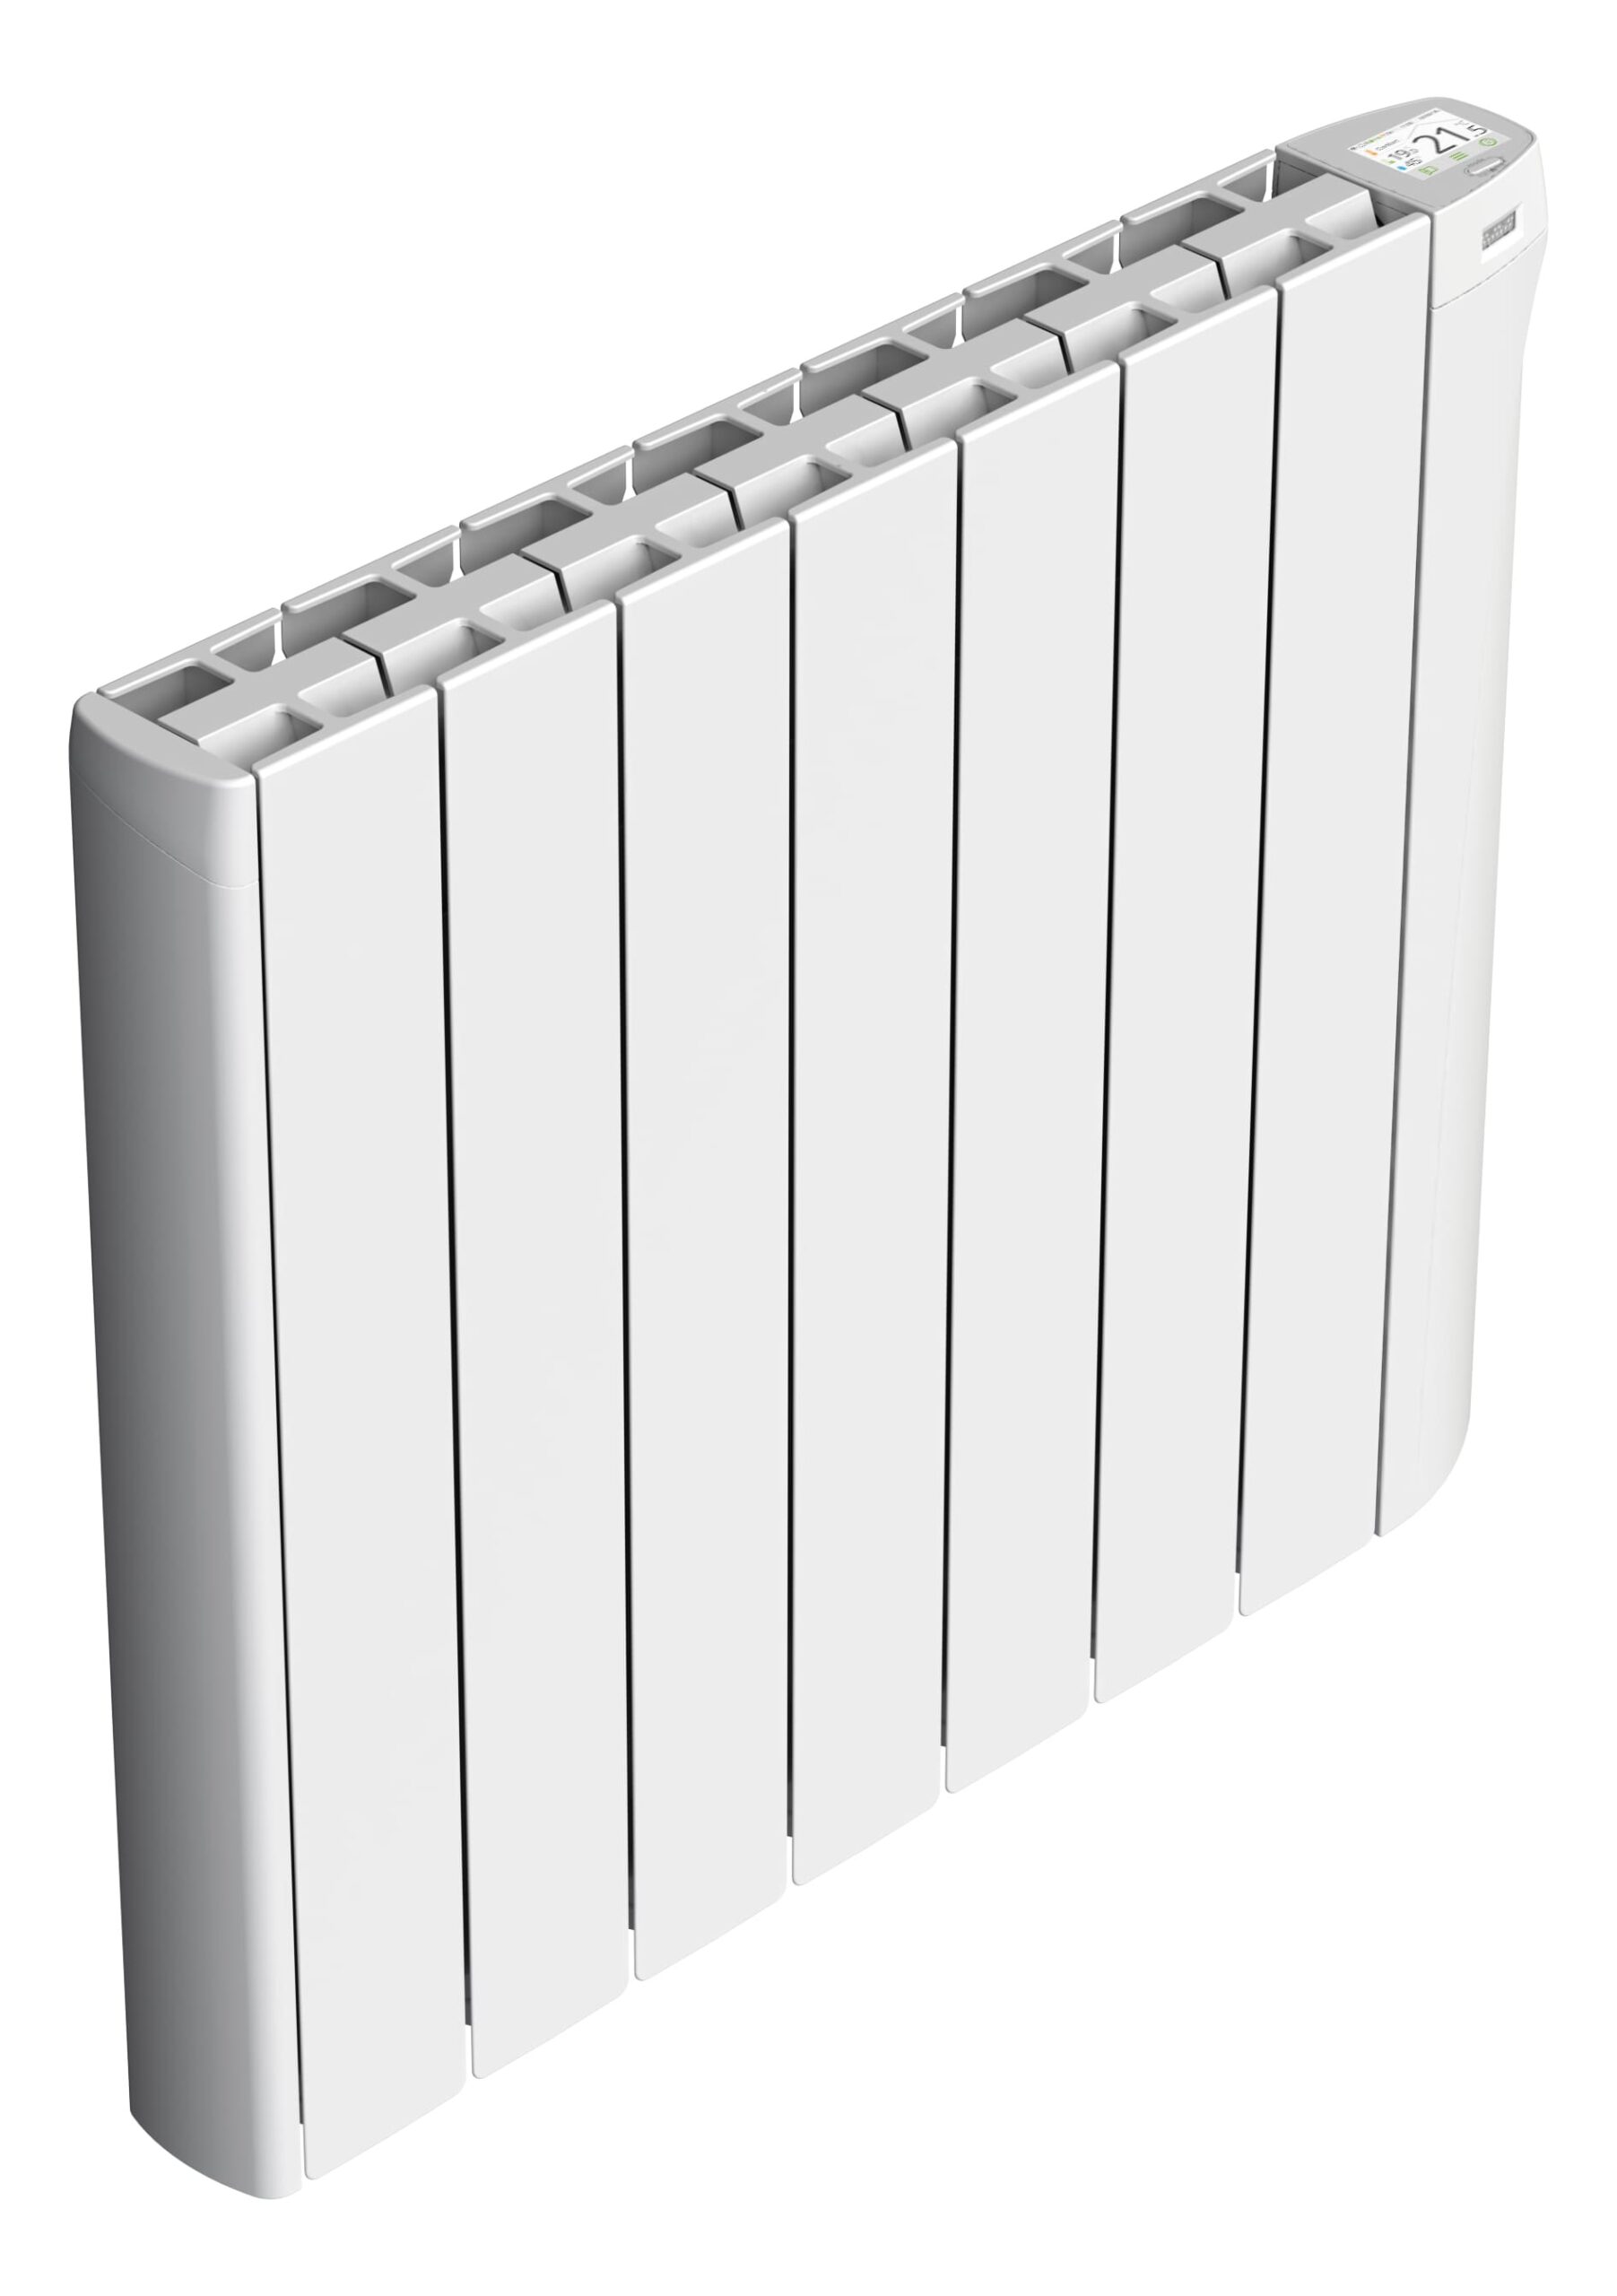 isense wifi smart electric radiators Picture intelli heat